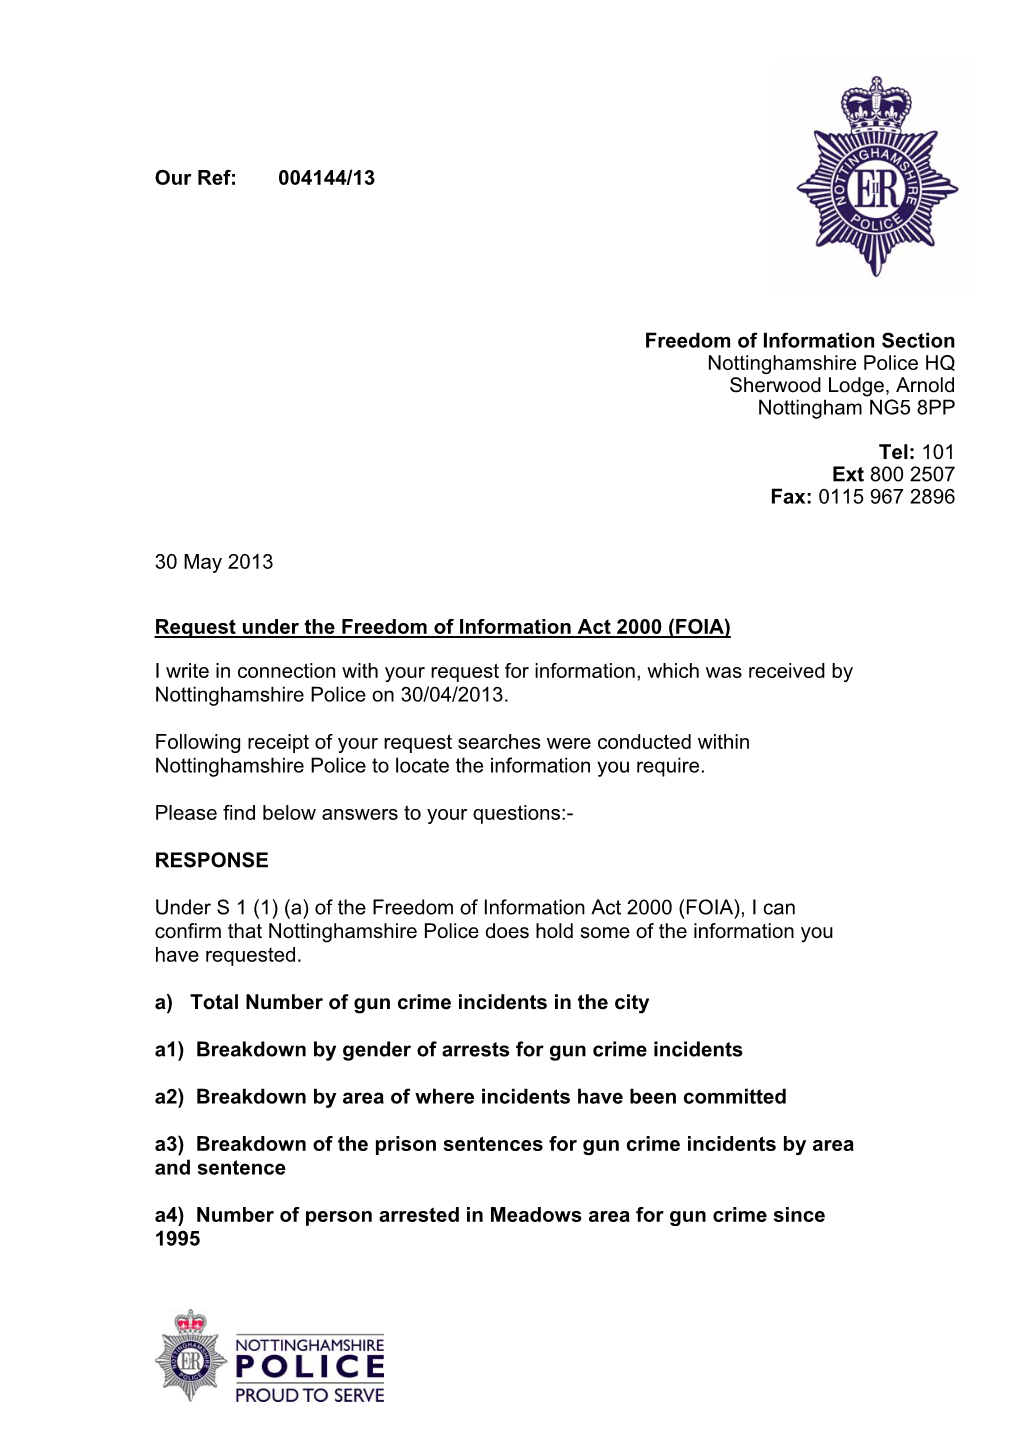 FOI 004144 13 Information Relating to Gun Crime Incidents